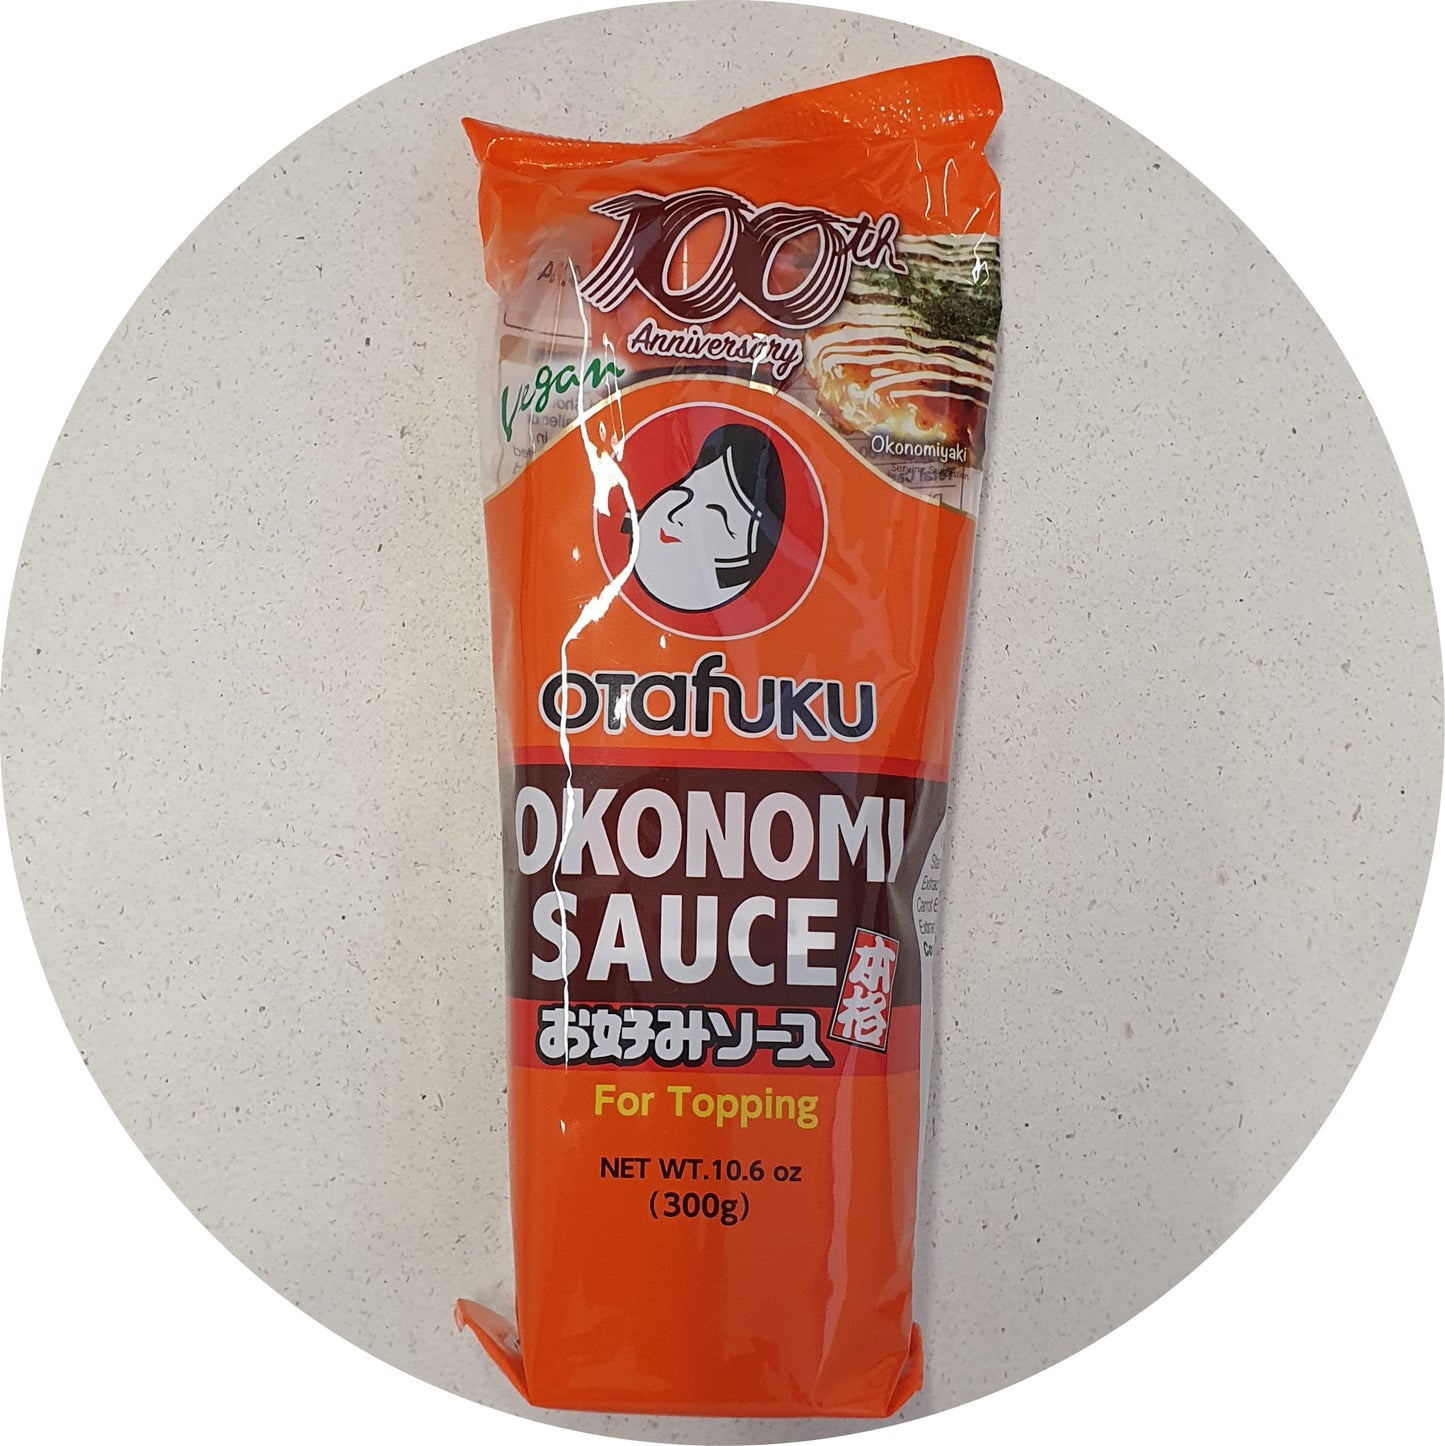 Otafuku Okonomi Sauce 300g